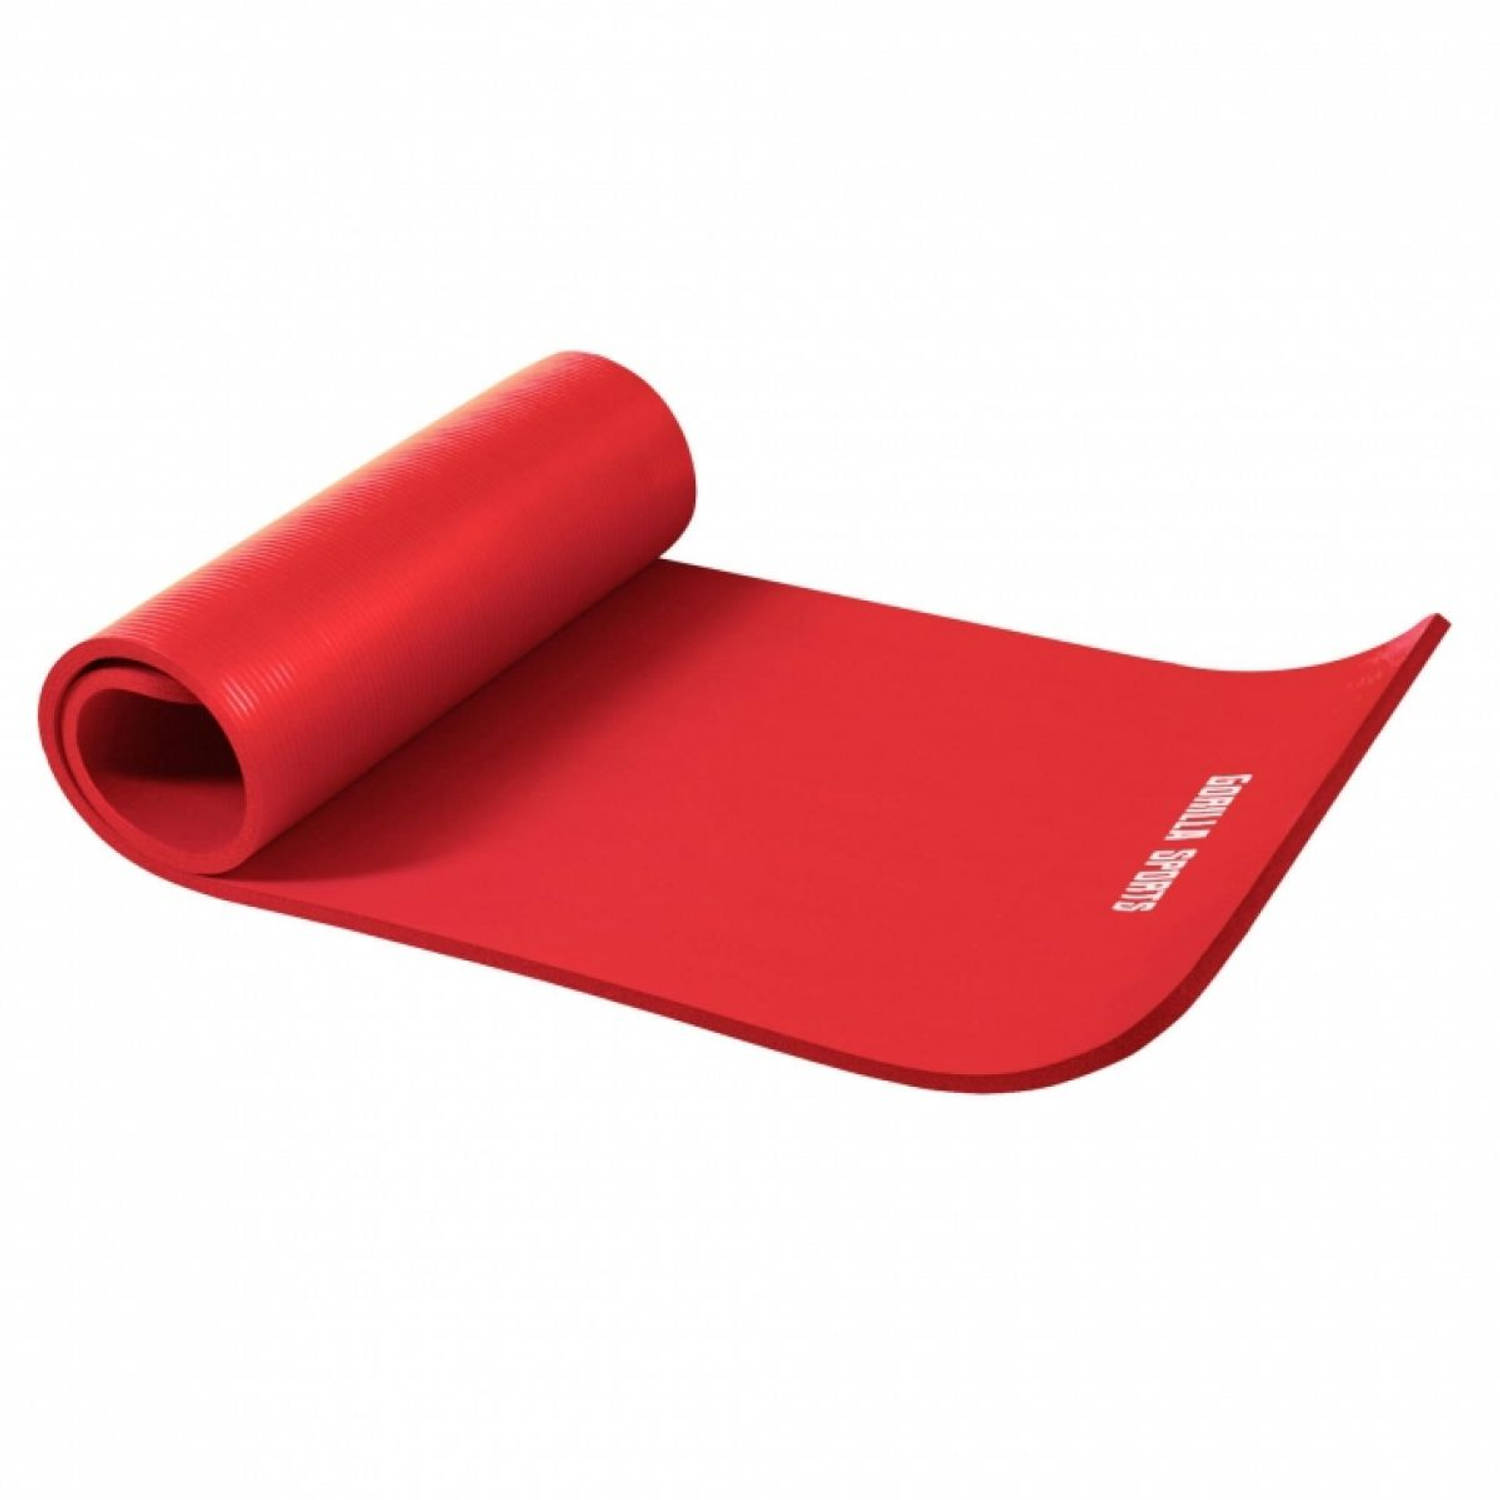 Yogamat Deluxe (190 x 100 x 1,5 cm) rood